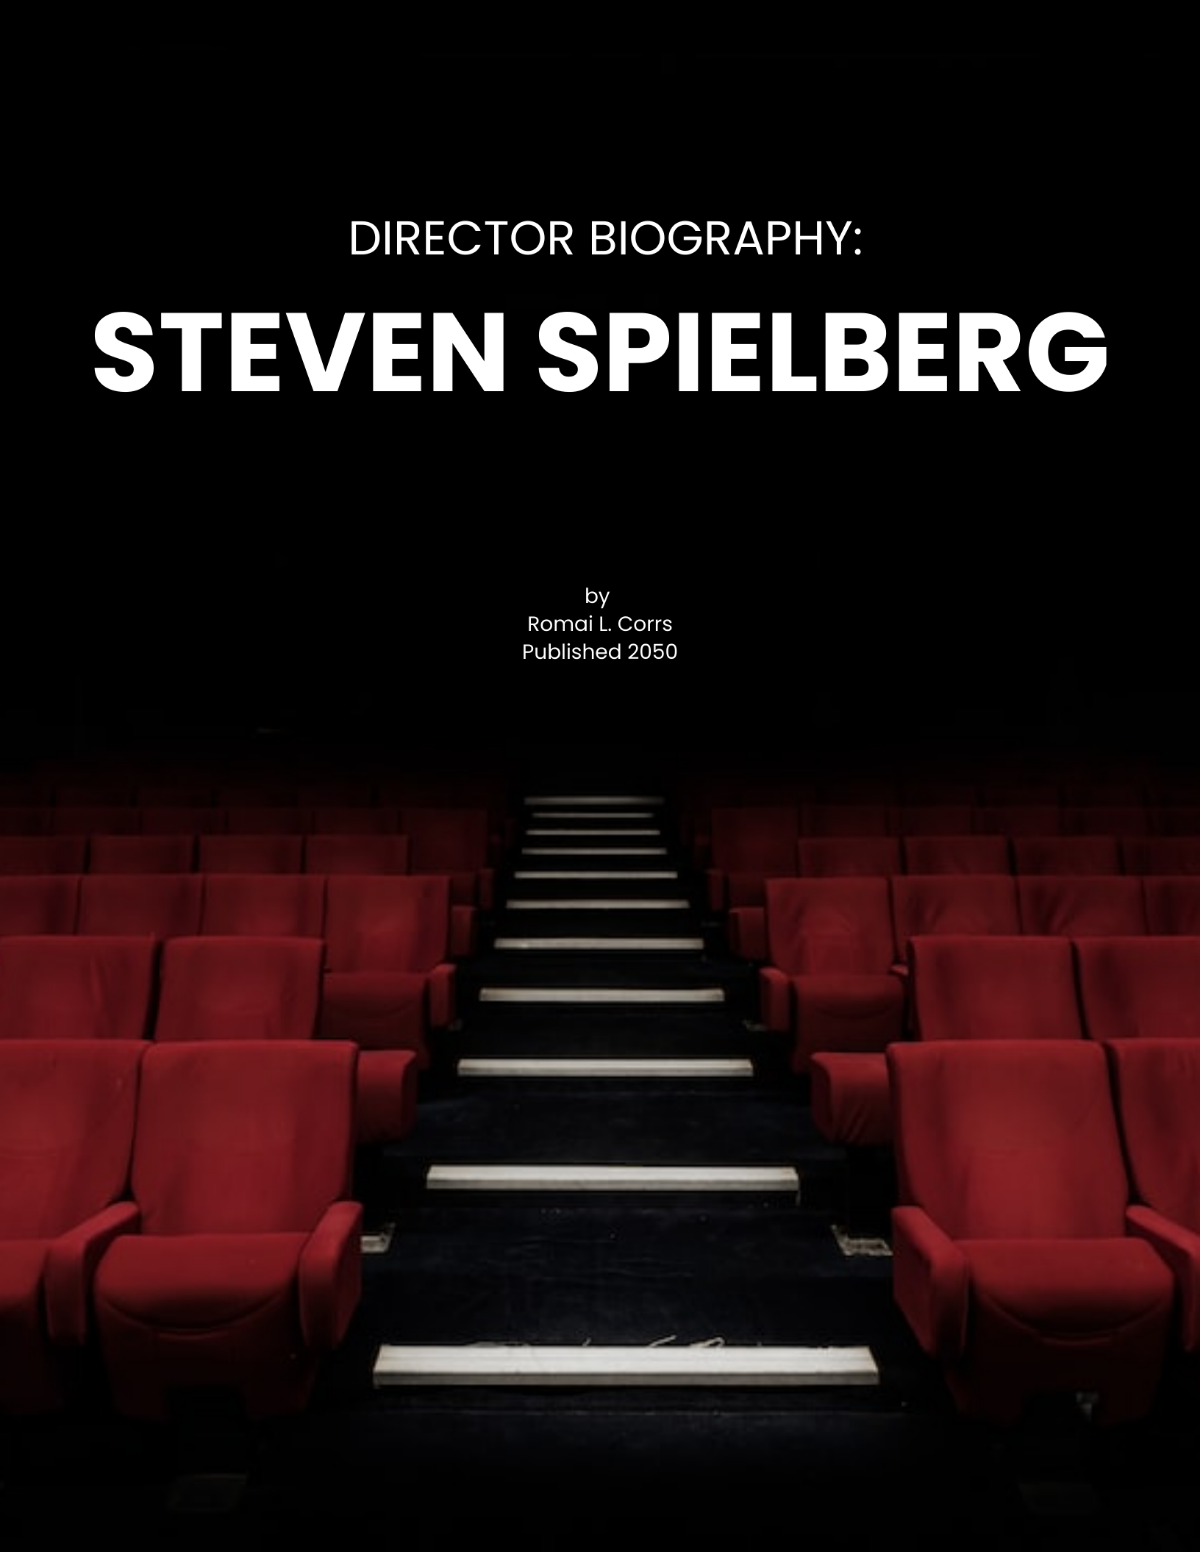 Director Biography Template